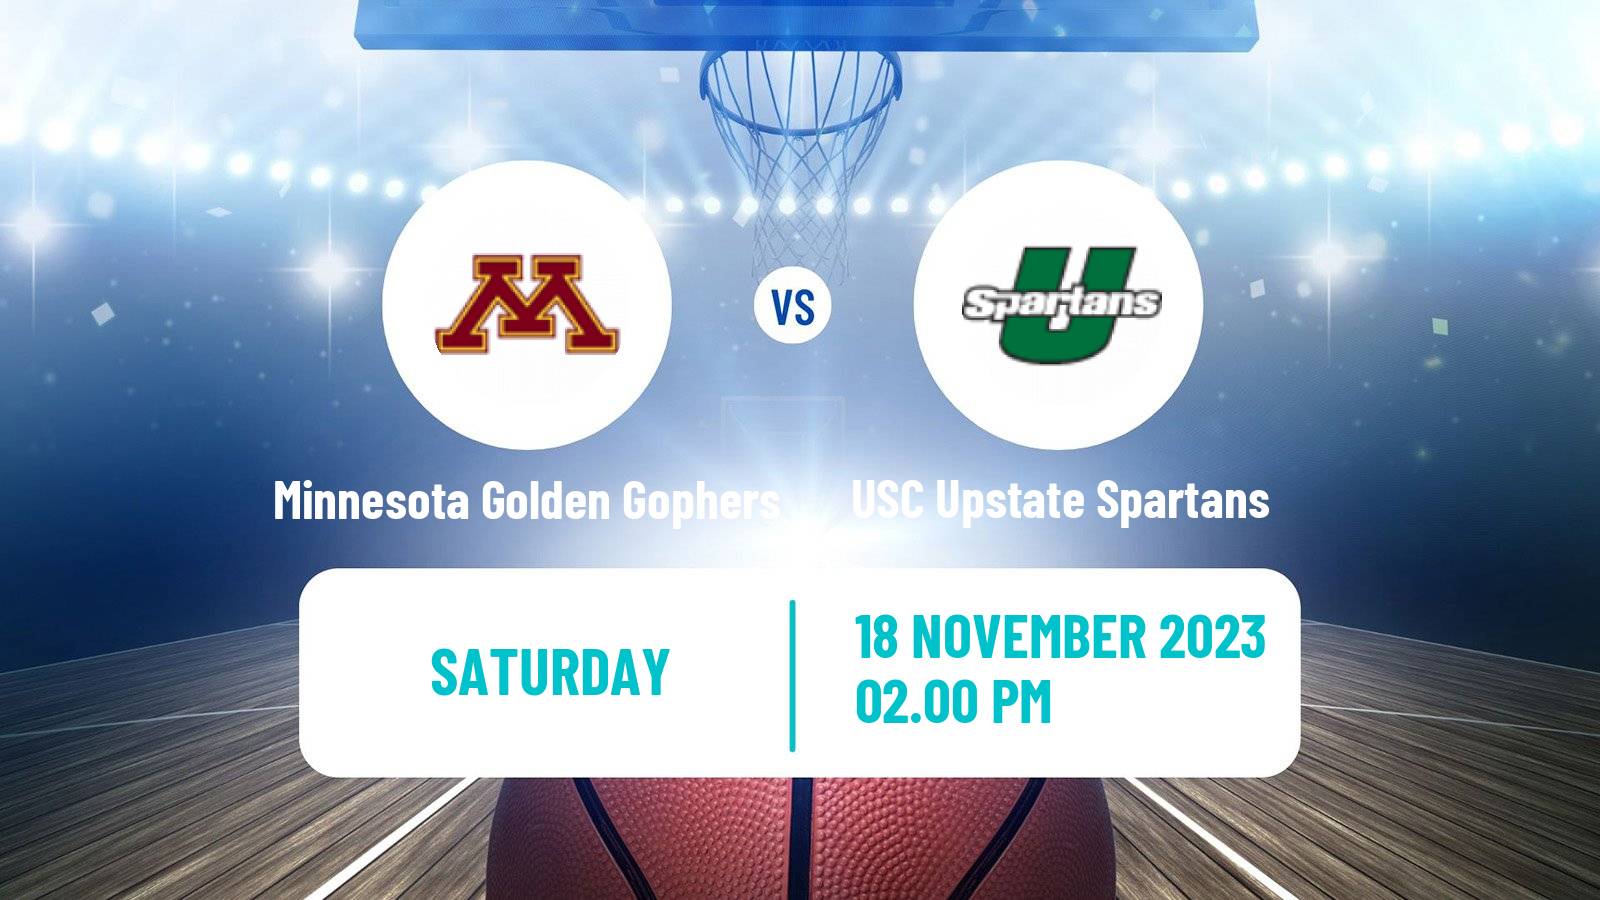 Basketball NCAA College Basketball Minnesota Golden Gophers - USC Upstate Spartans